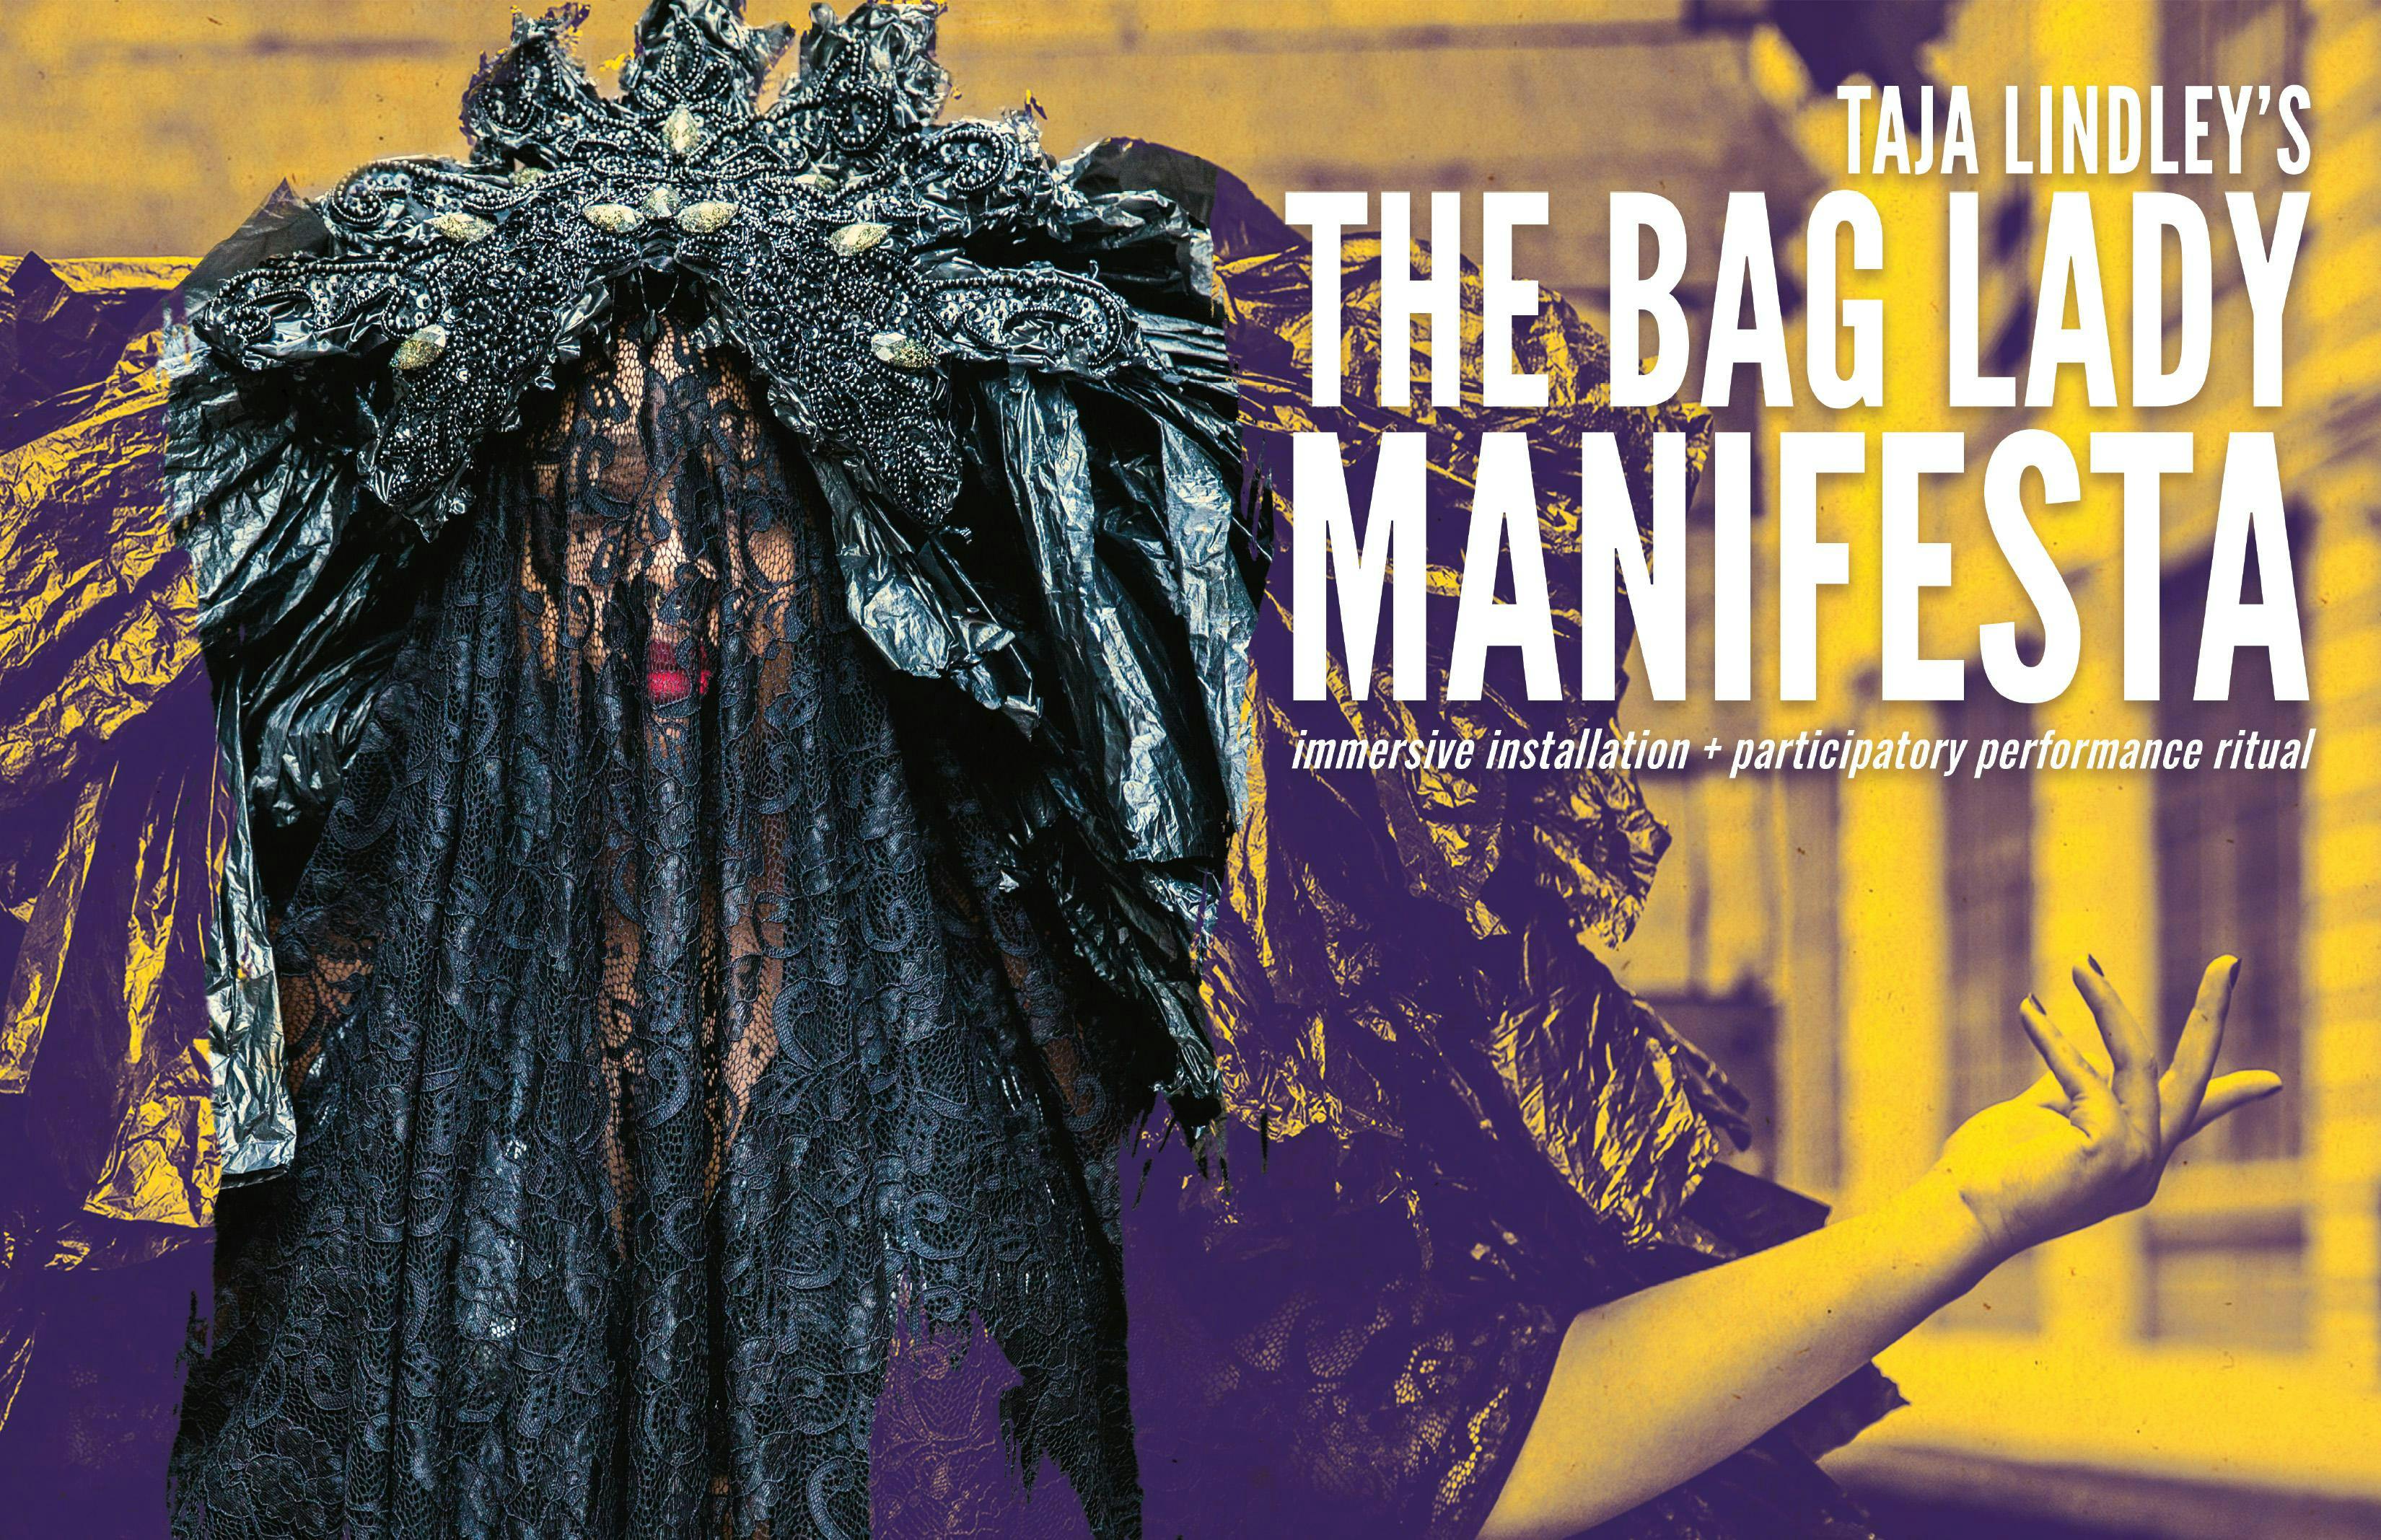 The Bag Lady Manifesta by Taja Lindley